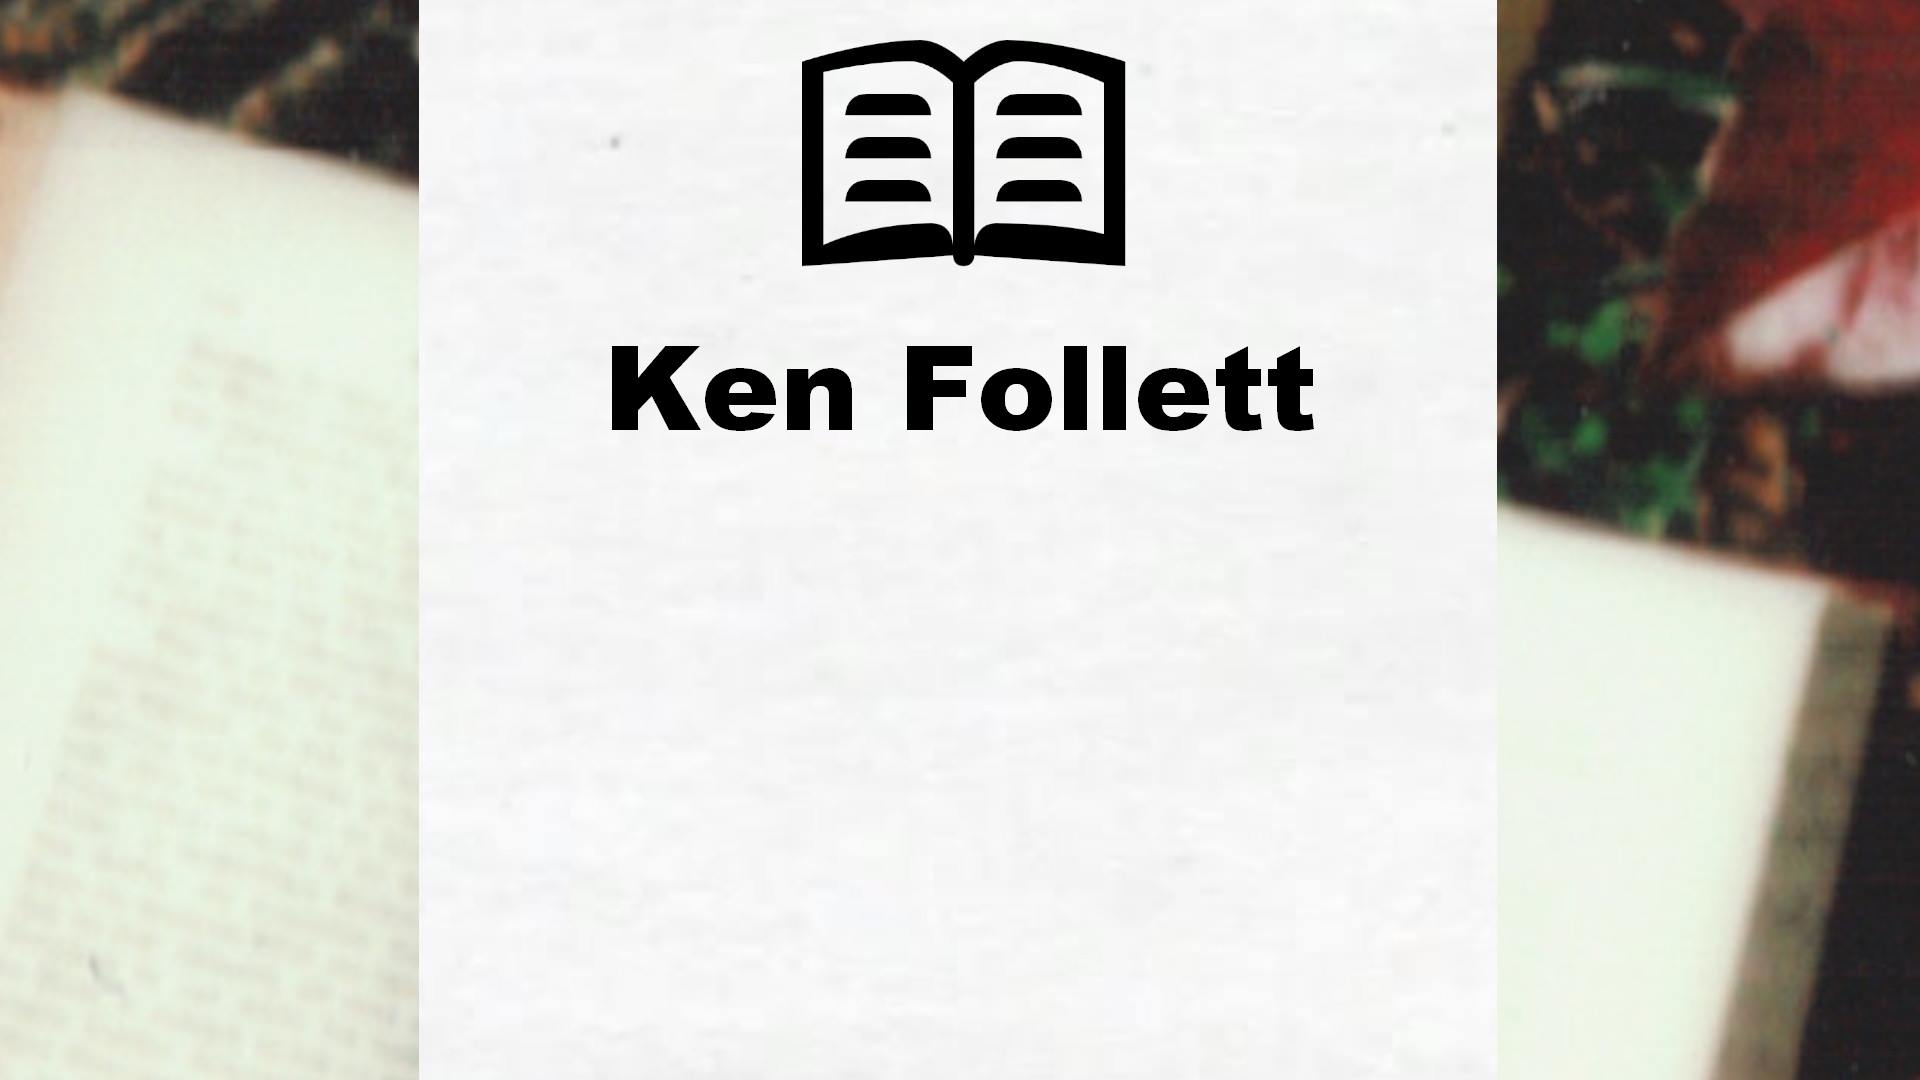 Livres de Ken Follett